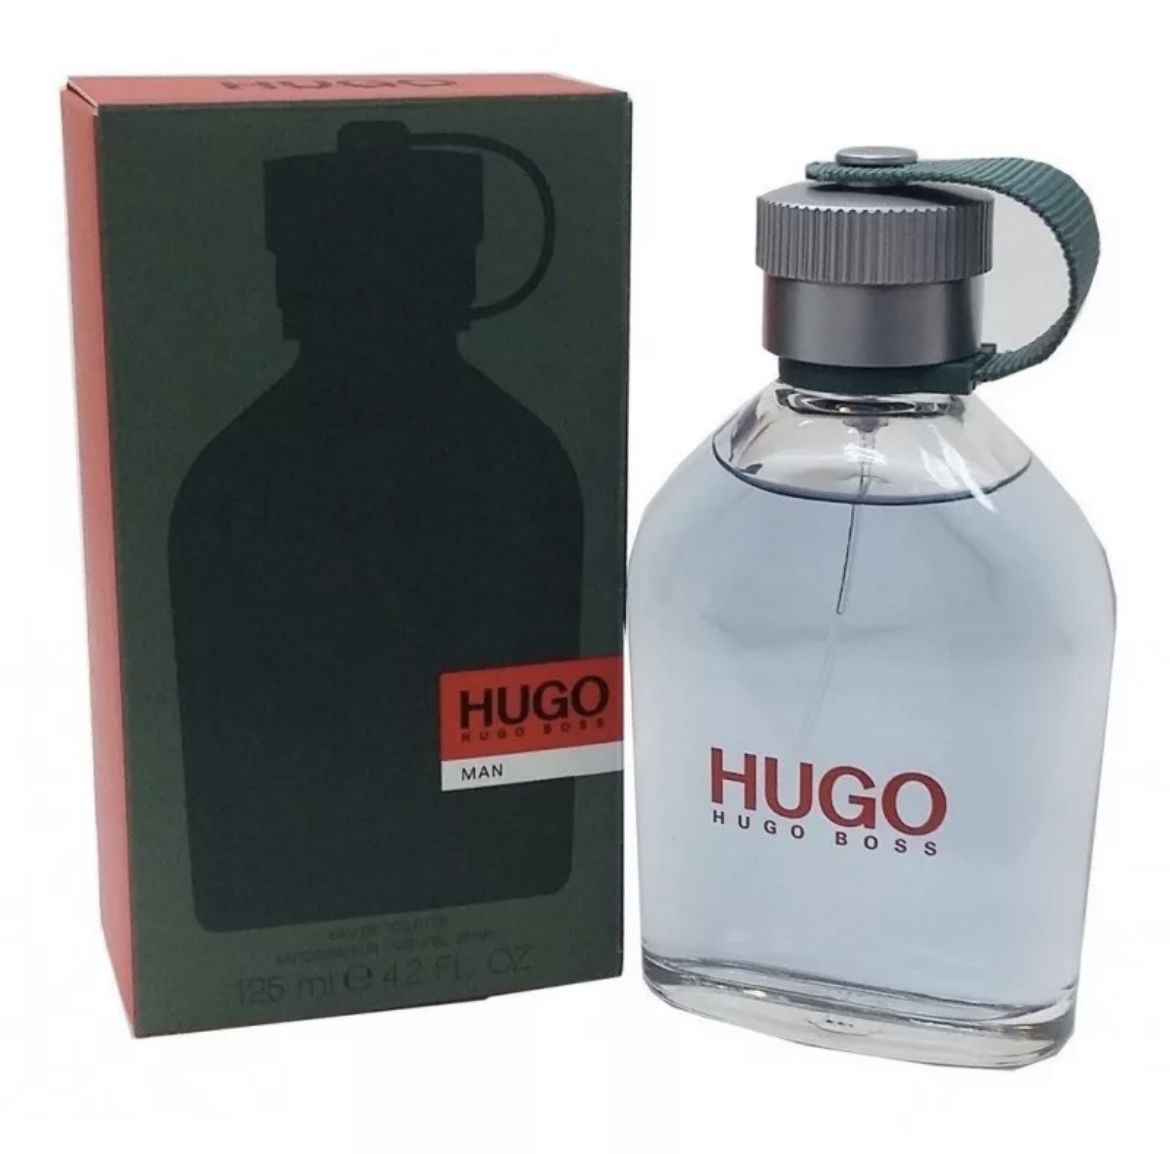 Хуго мужские. Boss Hugo Boss мужские духи. Мужской Парфюм Хьюго босс. Hugo Boss Hugo man 125. Hugo Boss Hugo туалетная вода 125 мл.